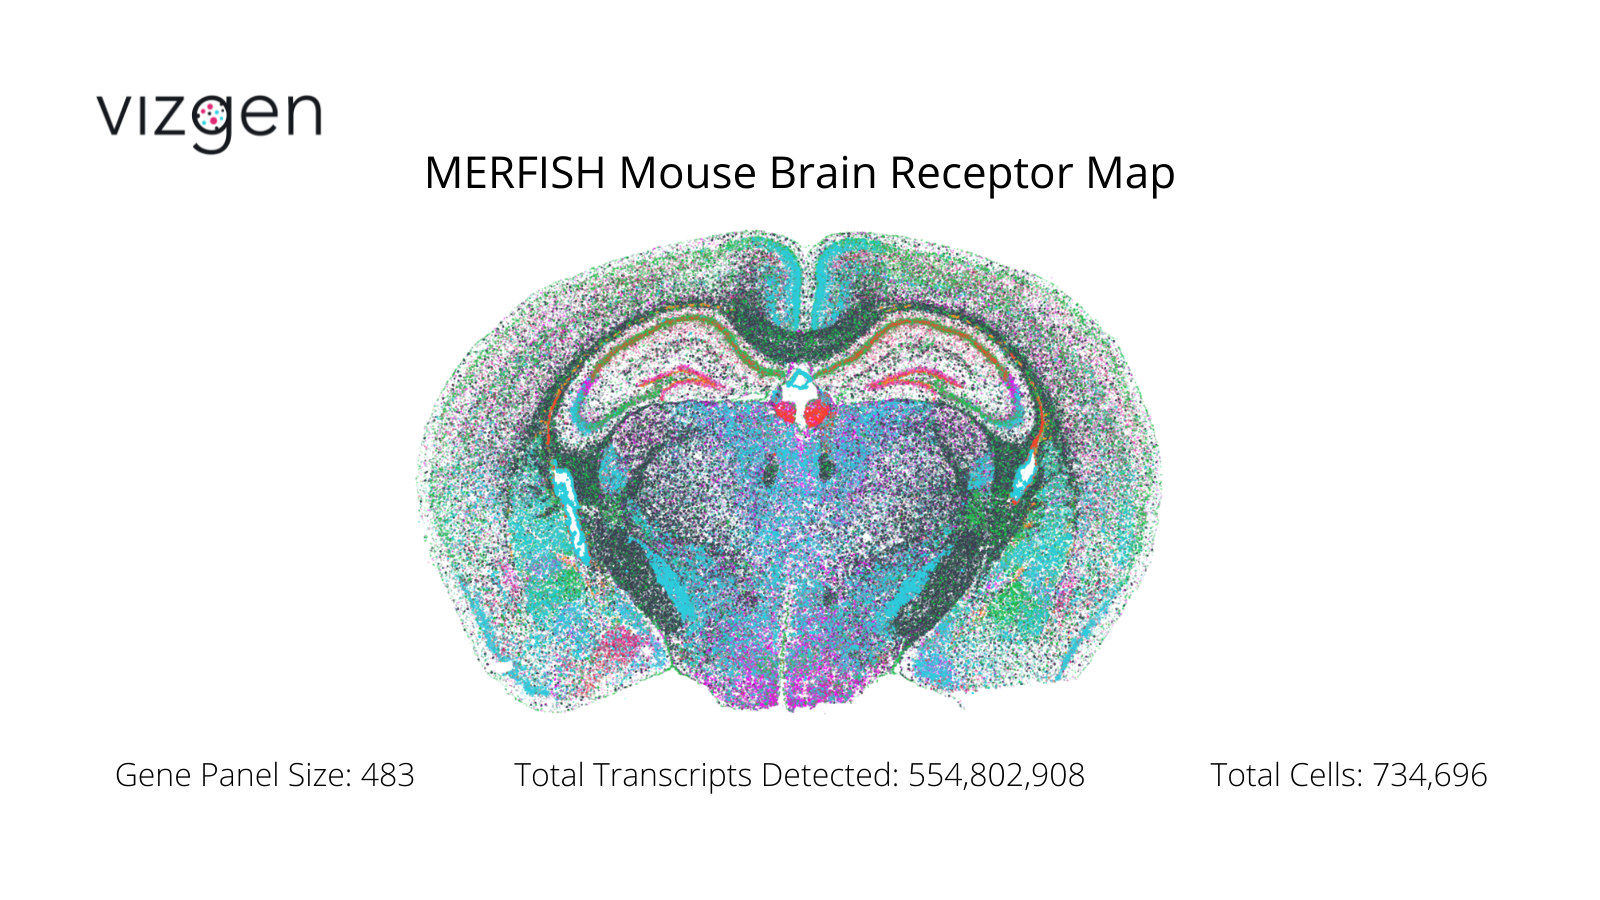 MERFISH Mouse Brain Receptor Map